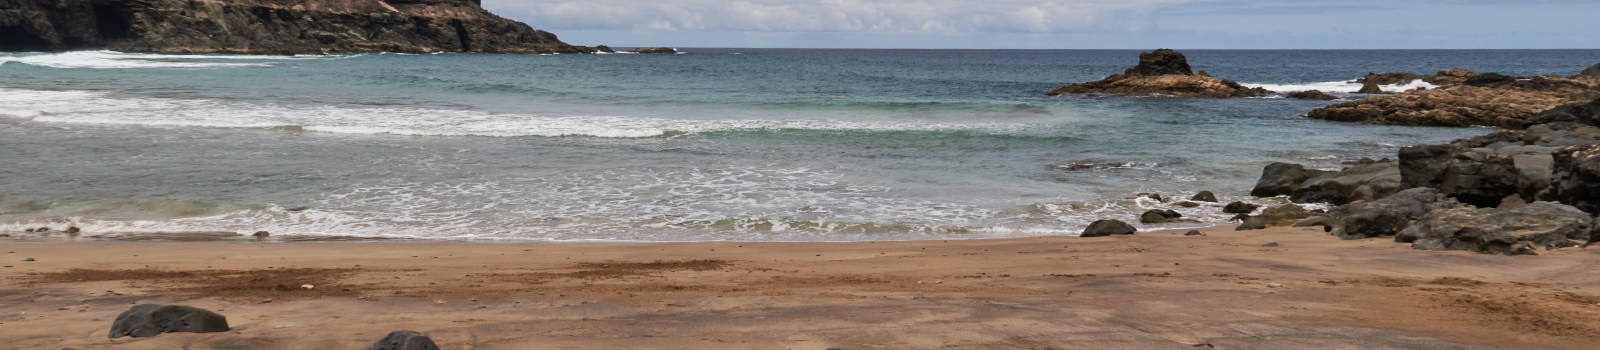 Die Strände Fuerteventuras: Playa Puerto los Molinos